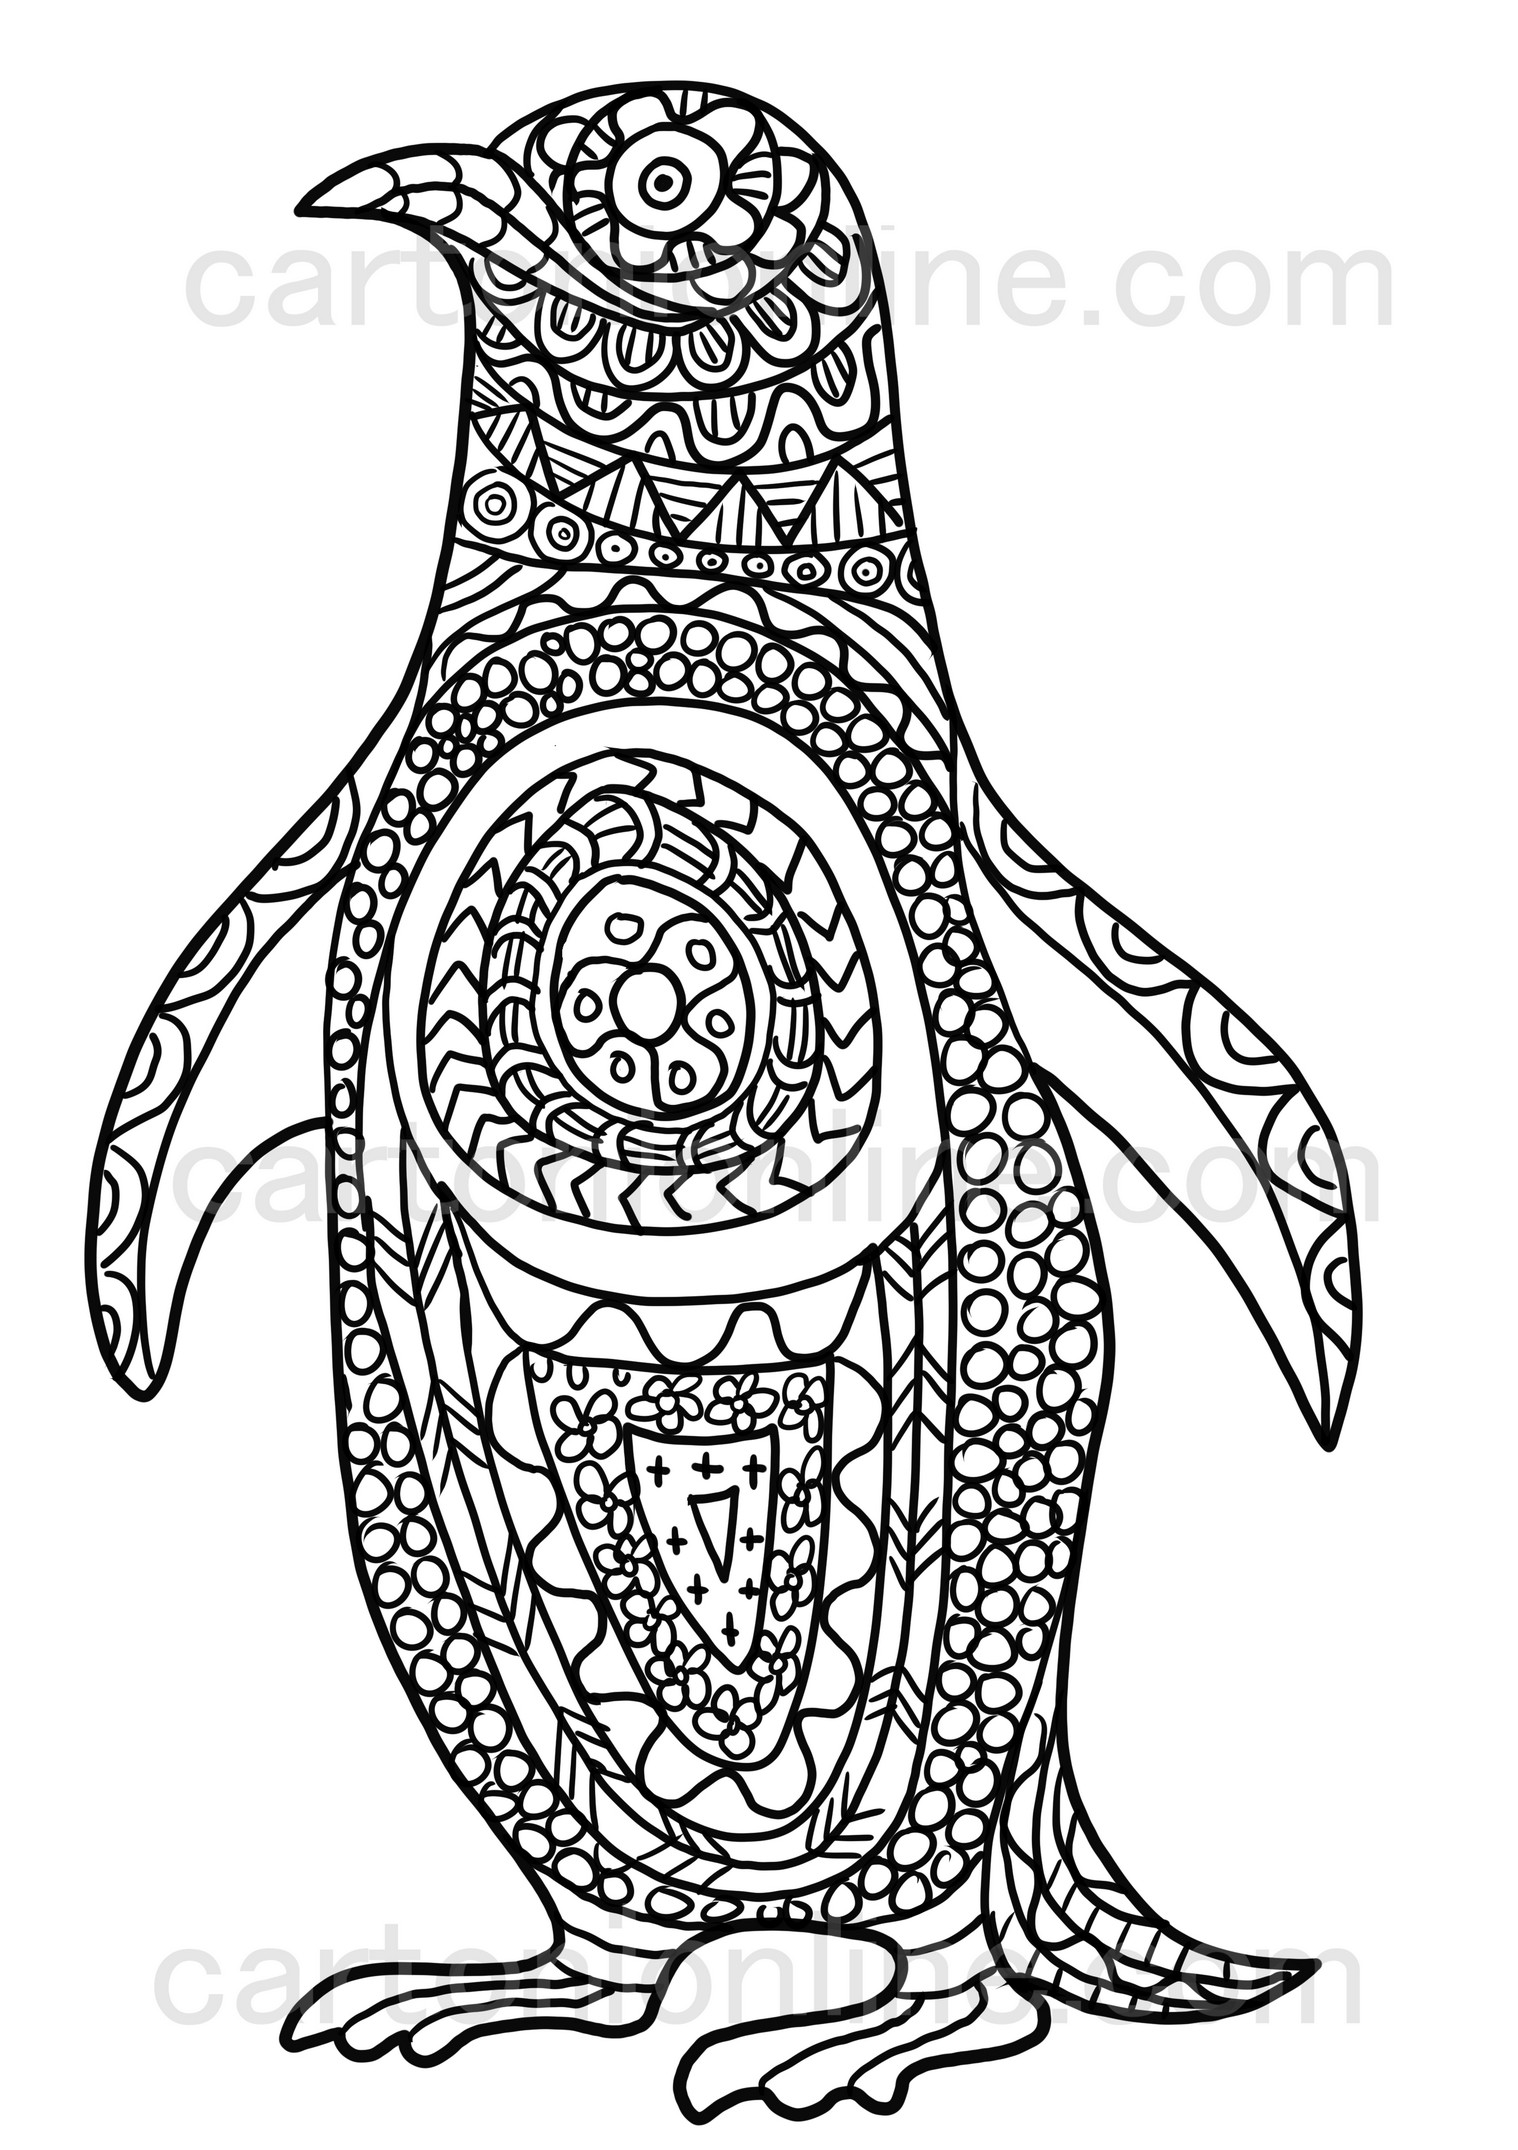 Penguin mandala coloring page